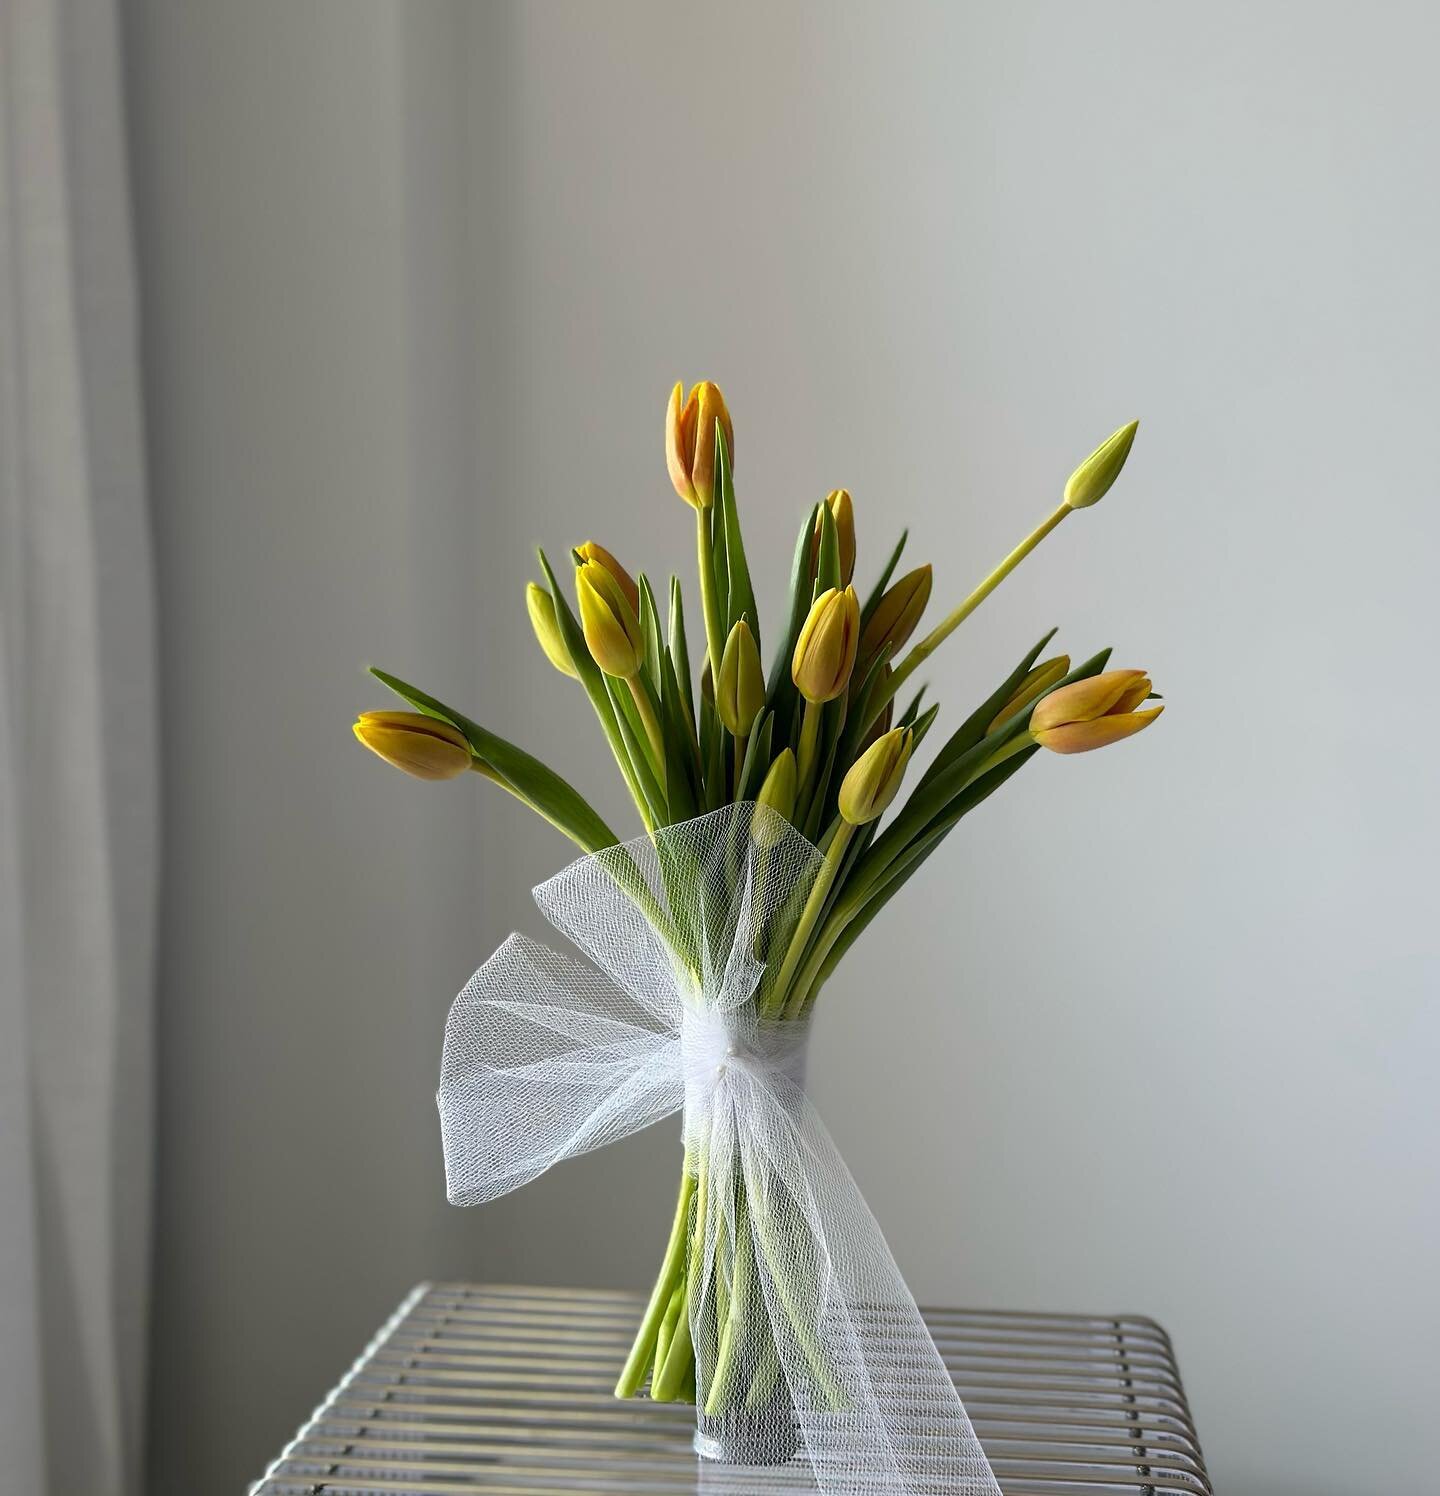 tulip season💃🏻
.
#tulipbouquet #tulleribbon
#bridalbouquet #modernbouquet
#nyflowerwedding #njflowerwedding
#events #튤립부케 #뉴저지웨딩플라워
#뉴욕웨딩플라워